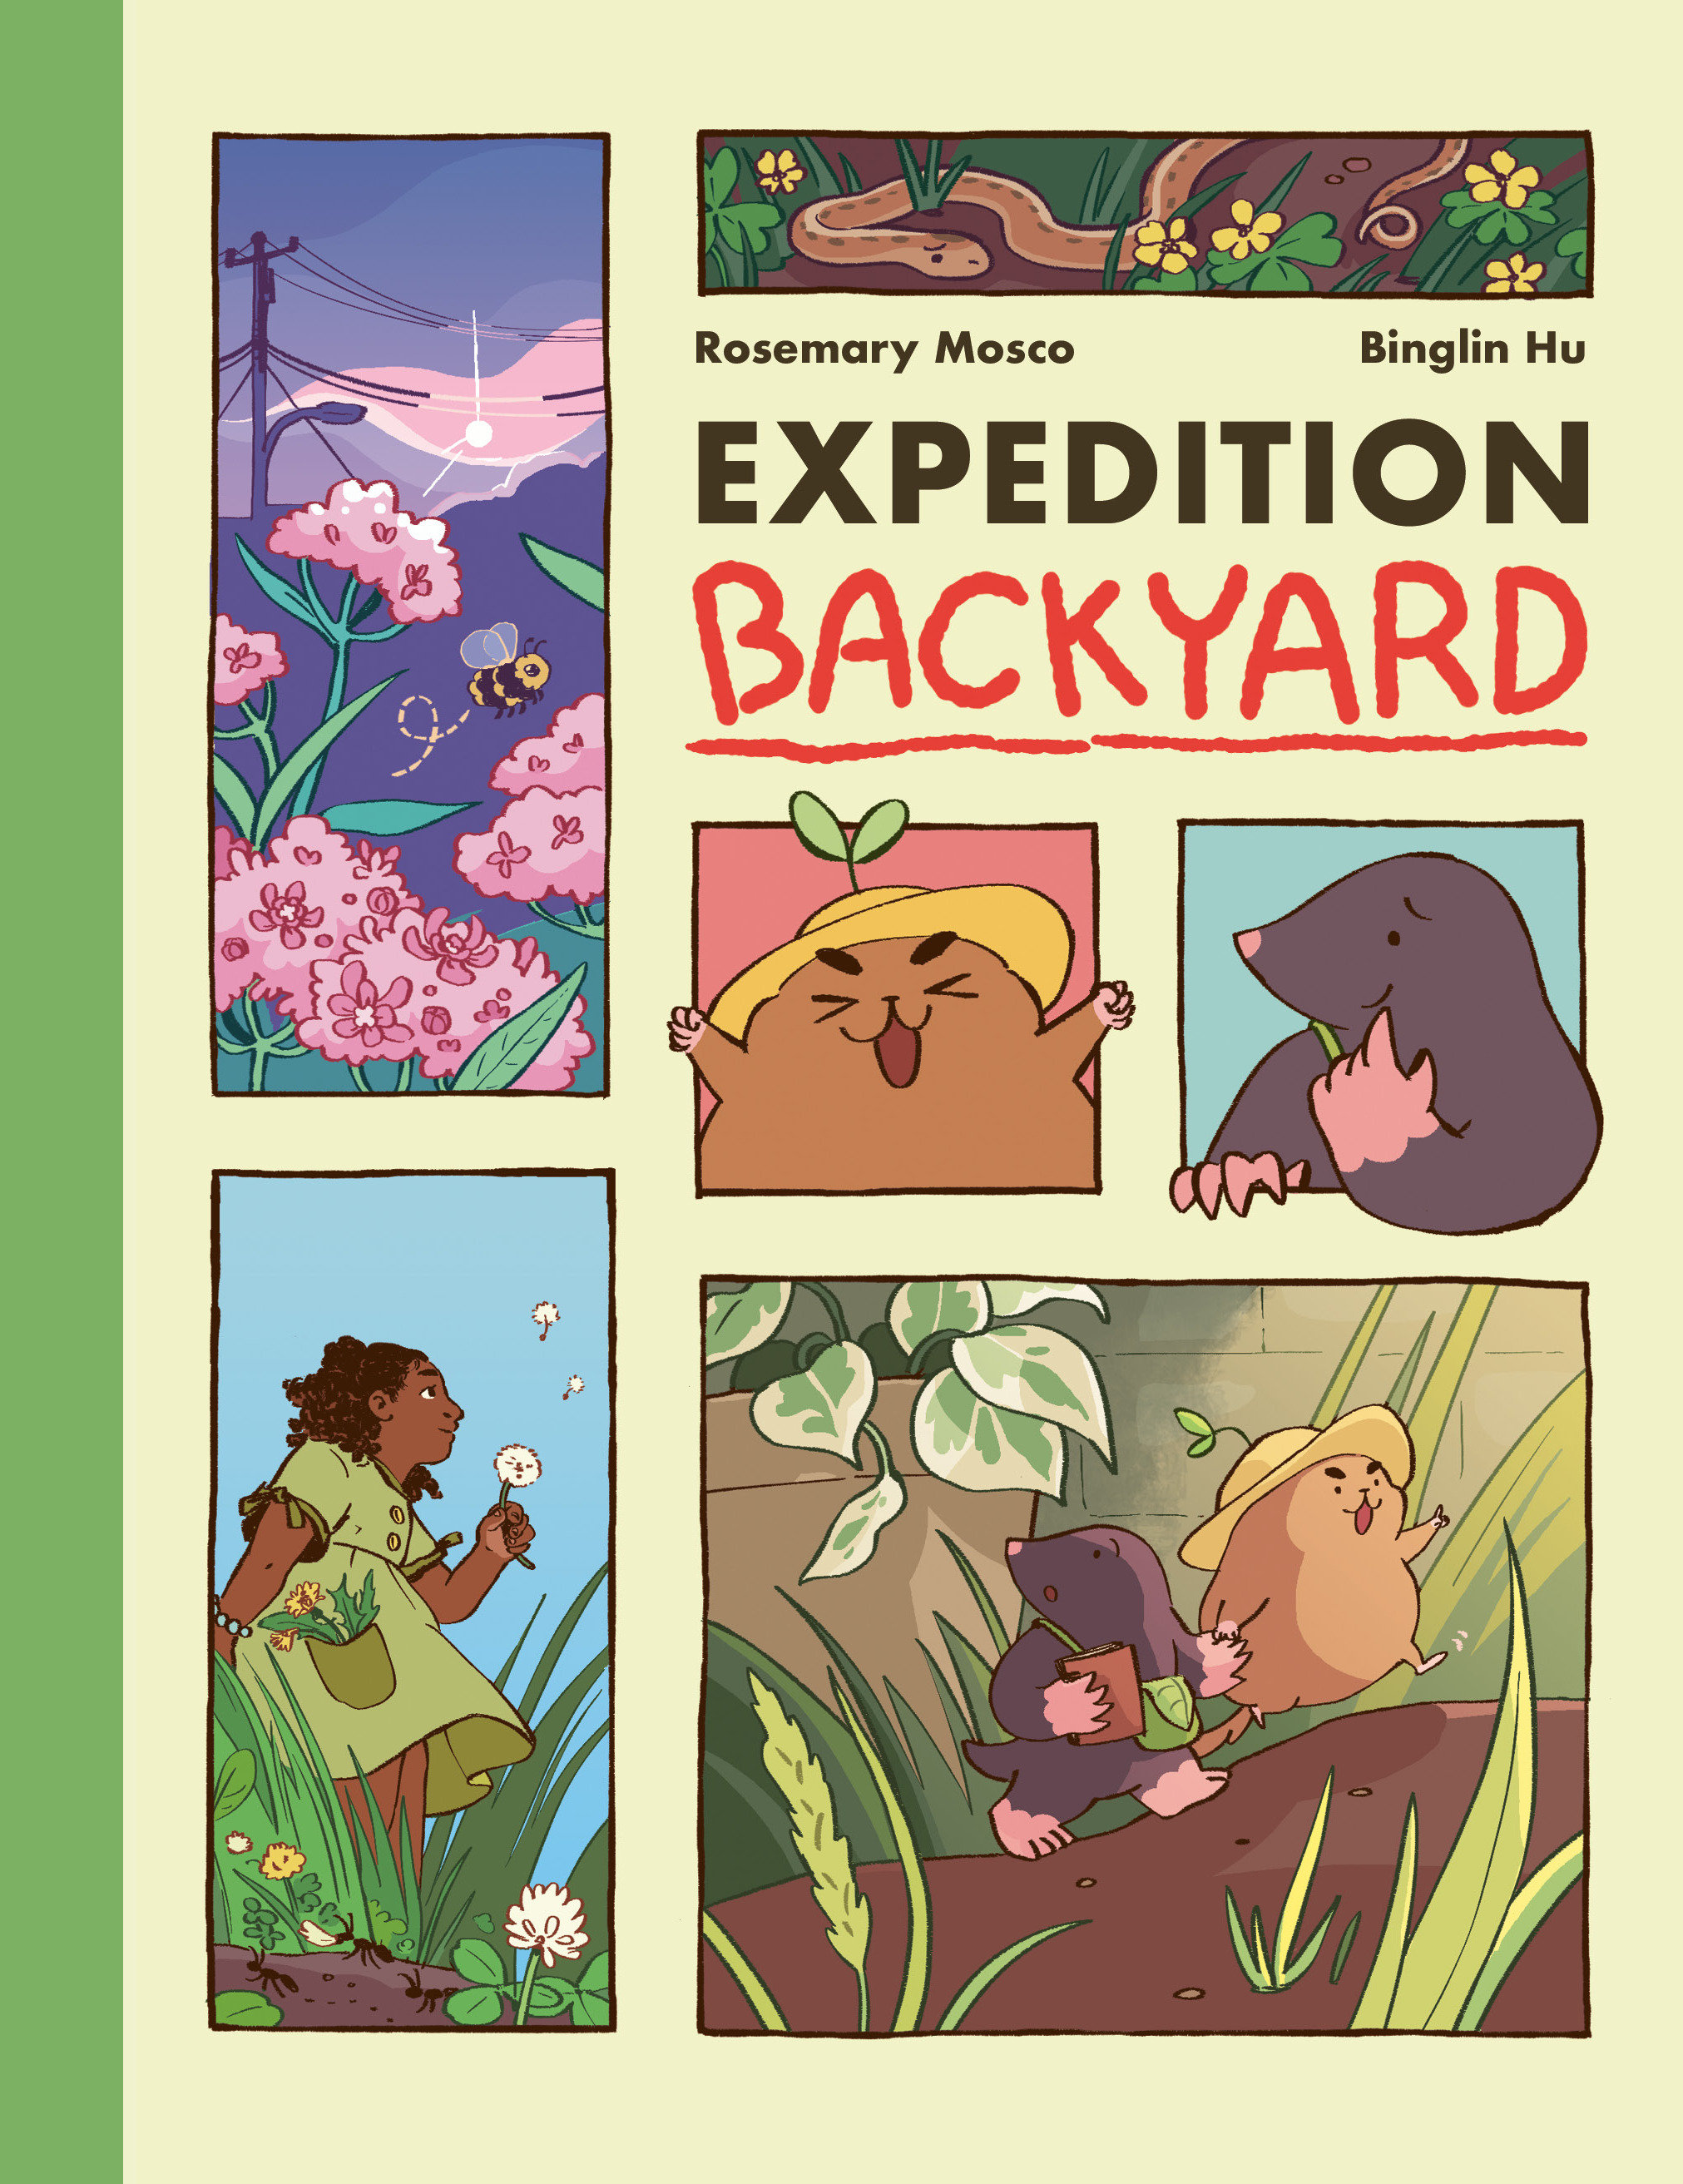 Expedition Backyard Graphic Novel